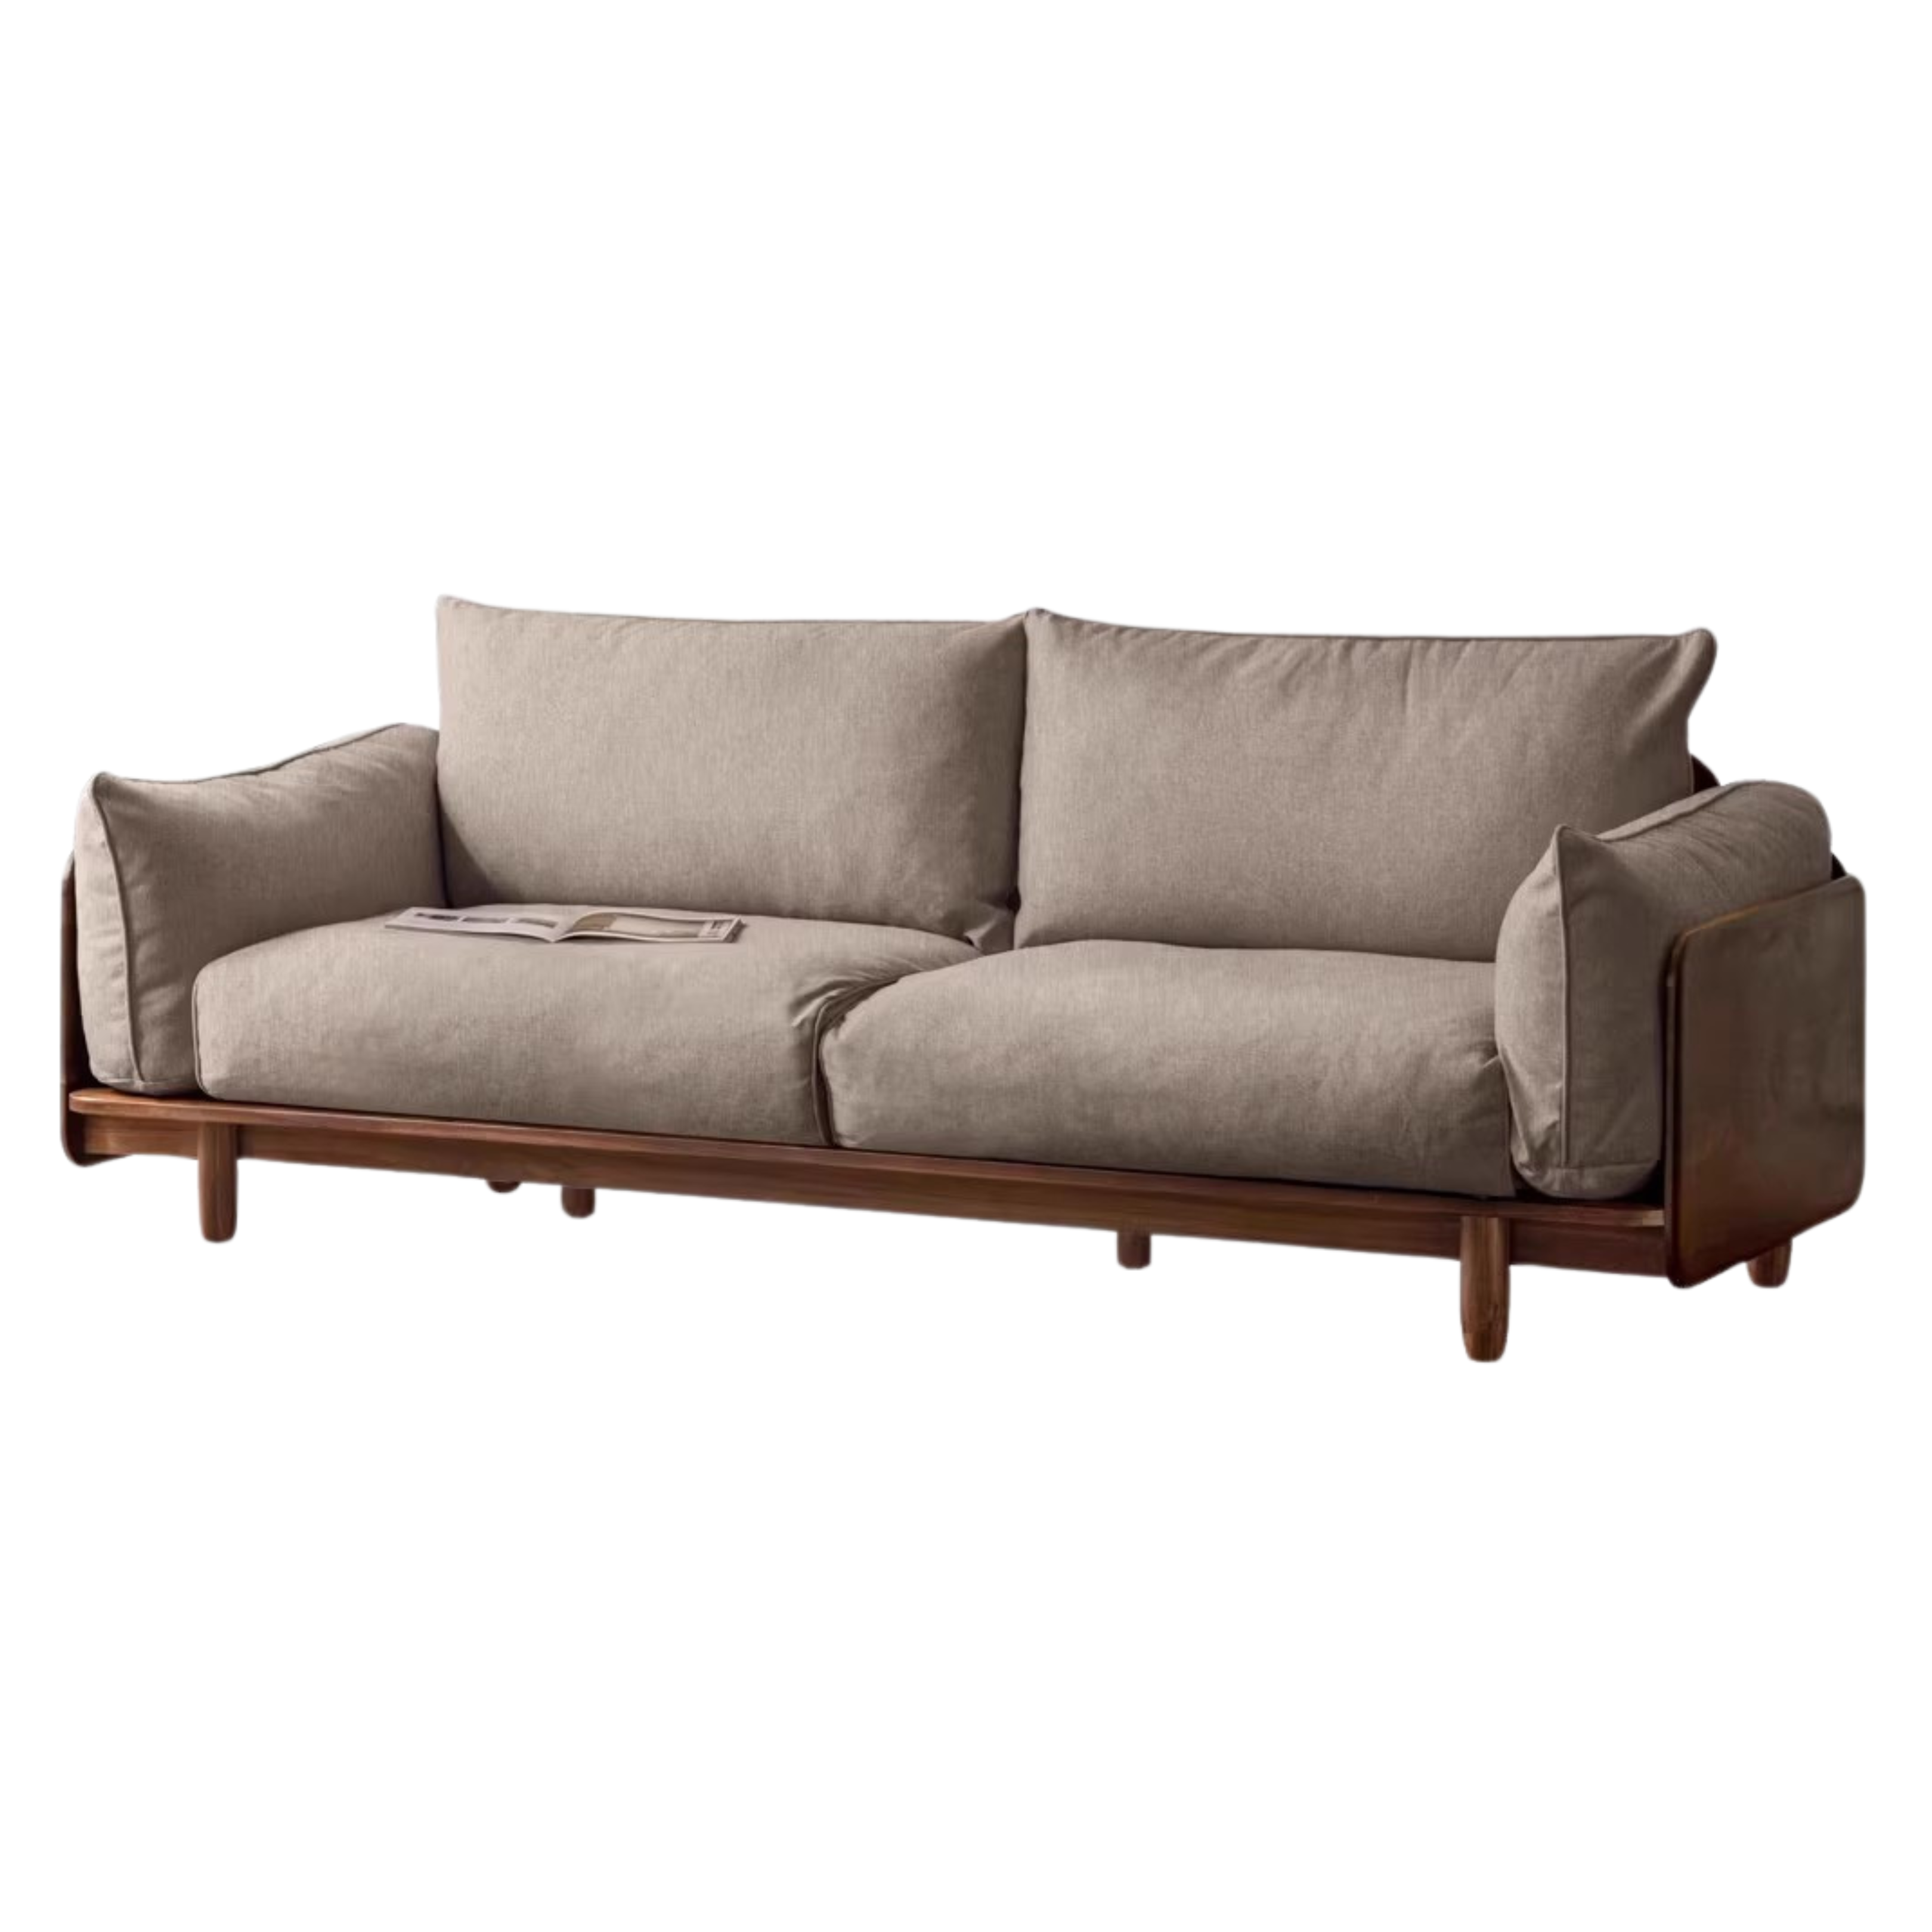 Black walnut solid wood Genuine leather sofa, fabric sofa: